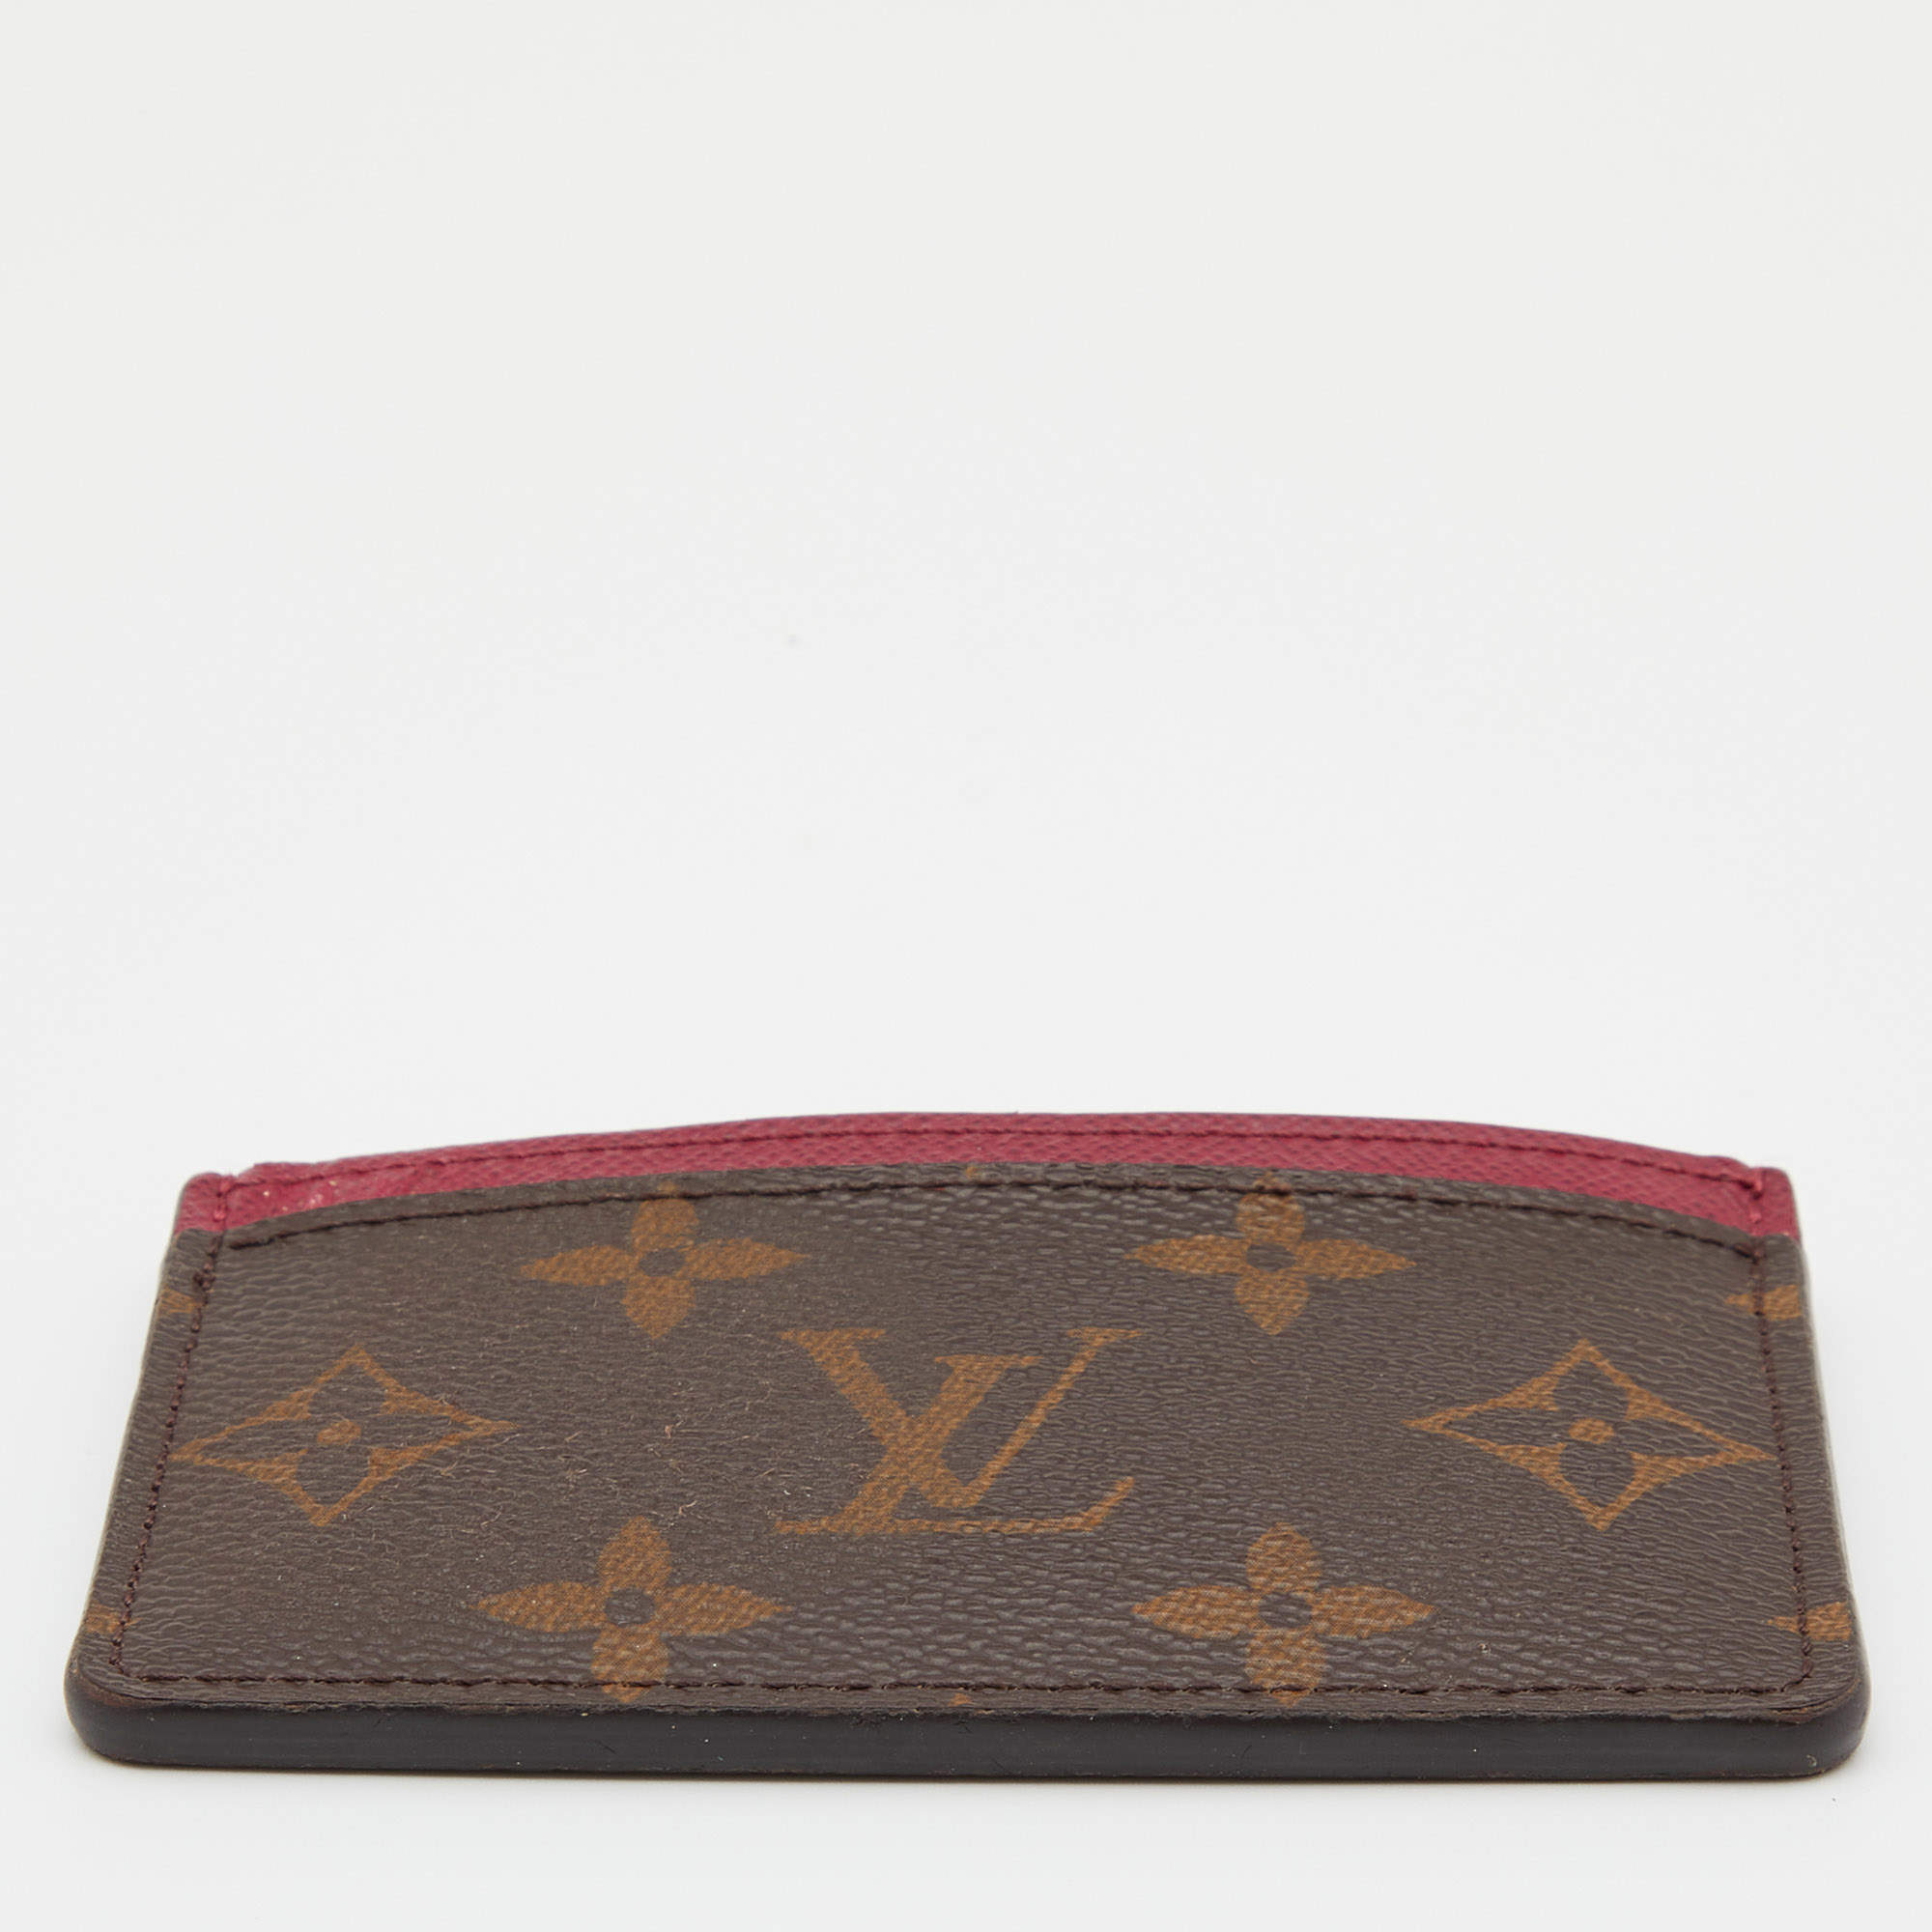 Louis Vuitton Monogram Fuchsia Card Holder